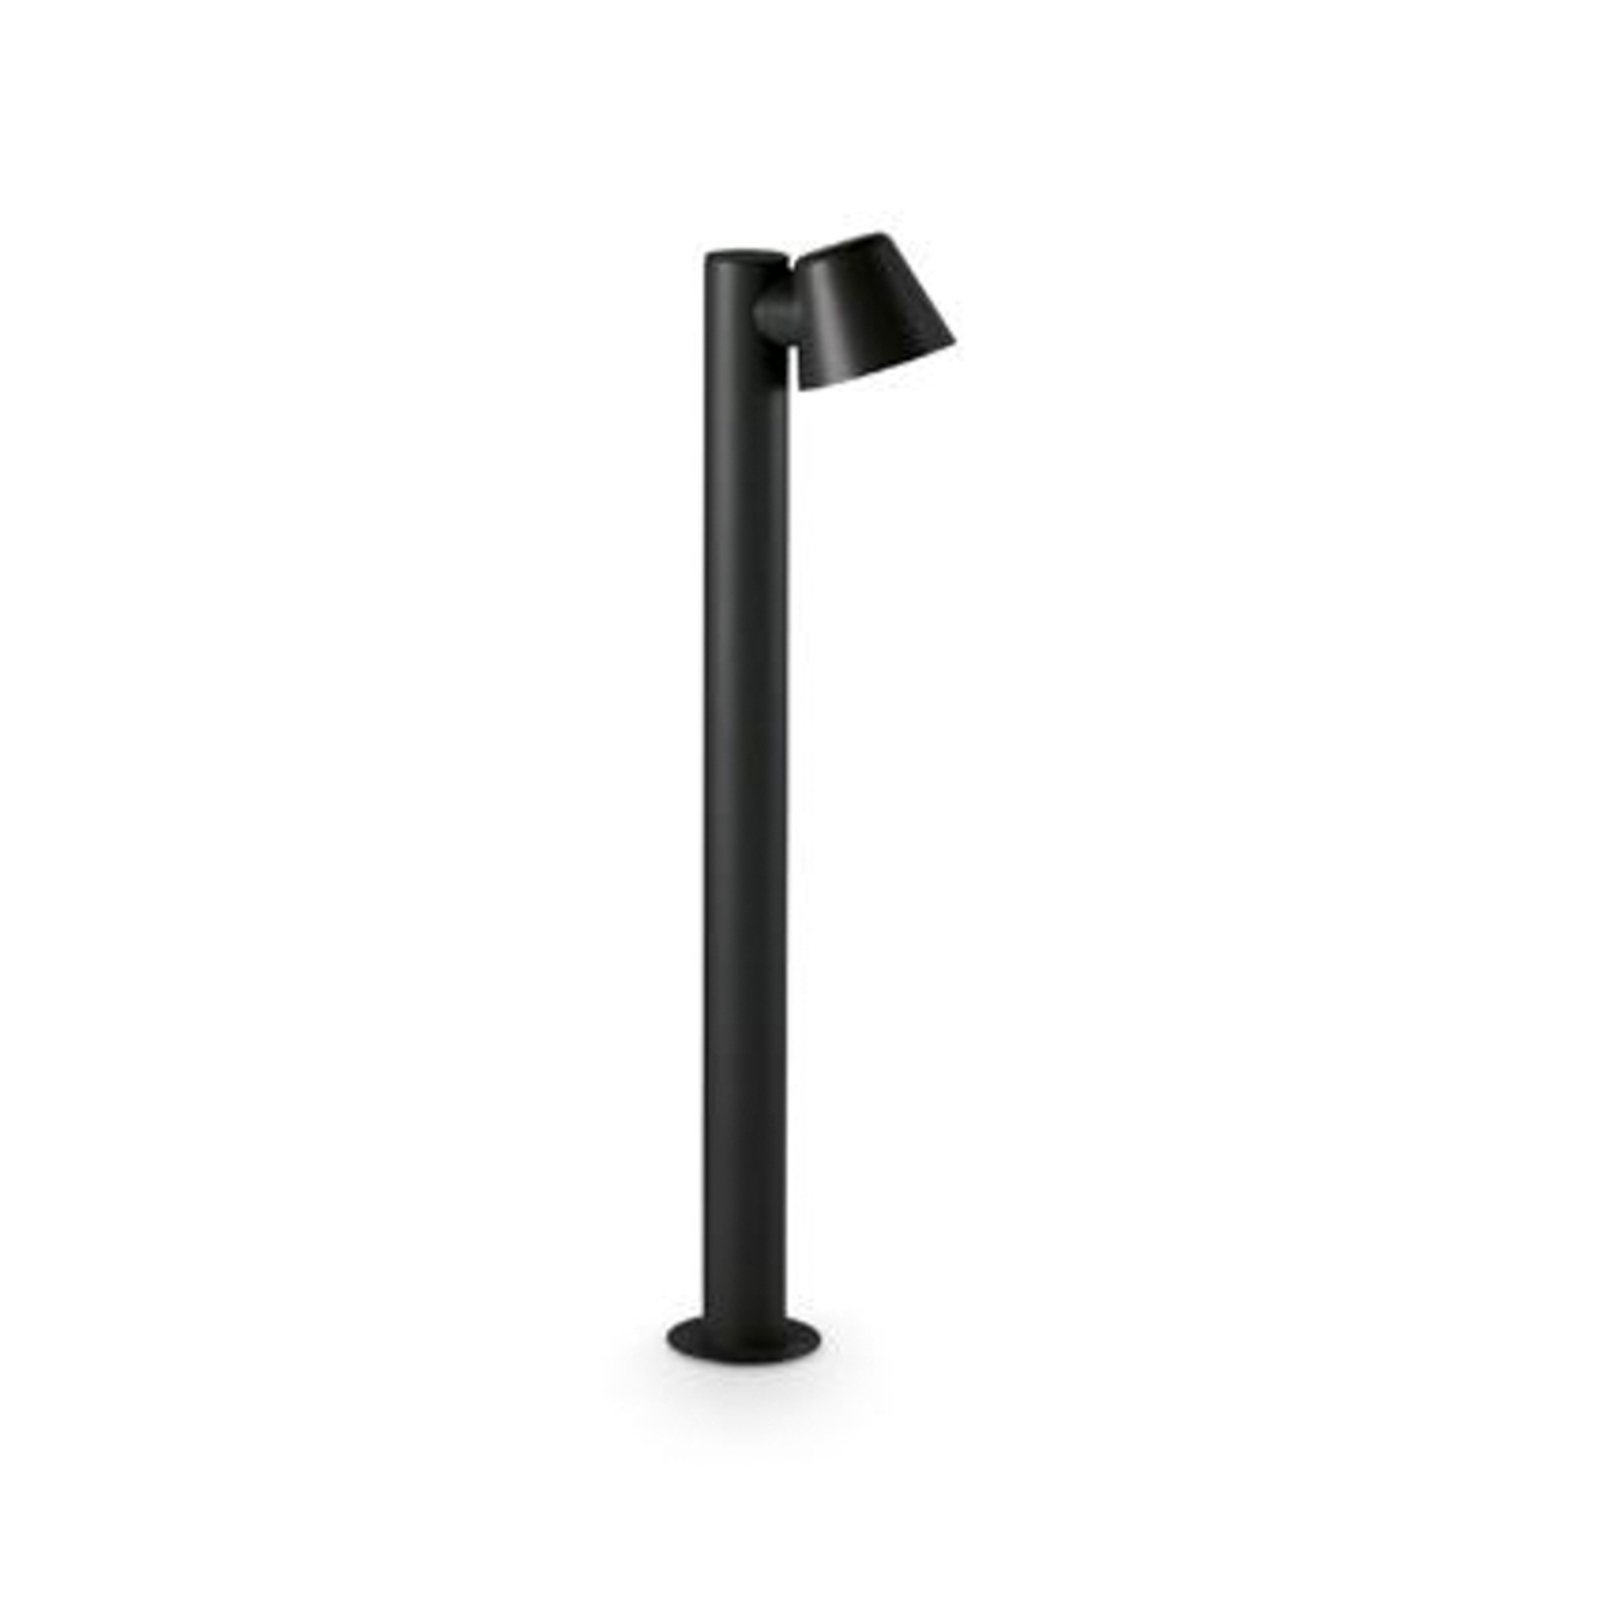 Ideal Lux plinska luč za pot, črna, aluminij, višina 80 cm